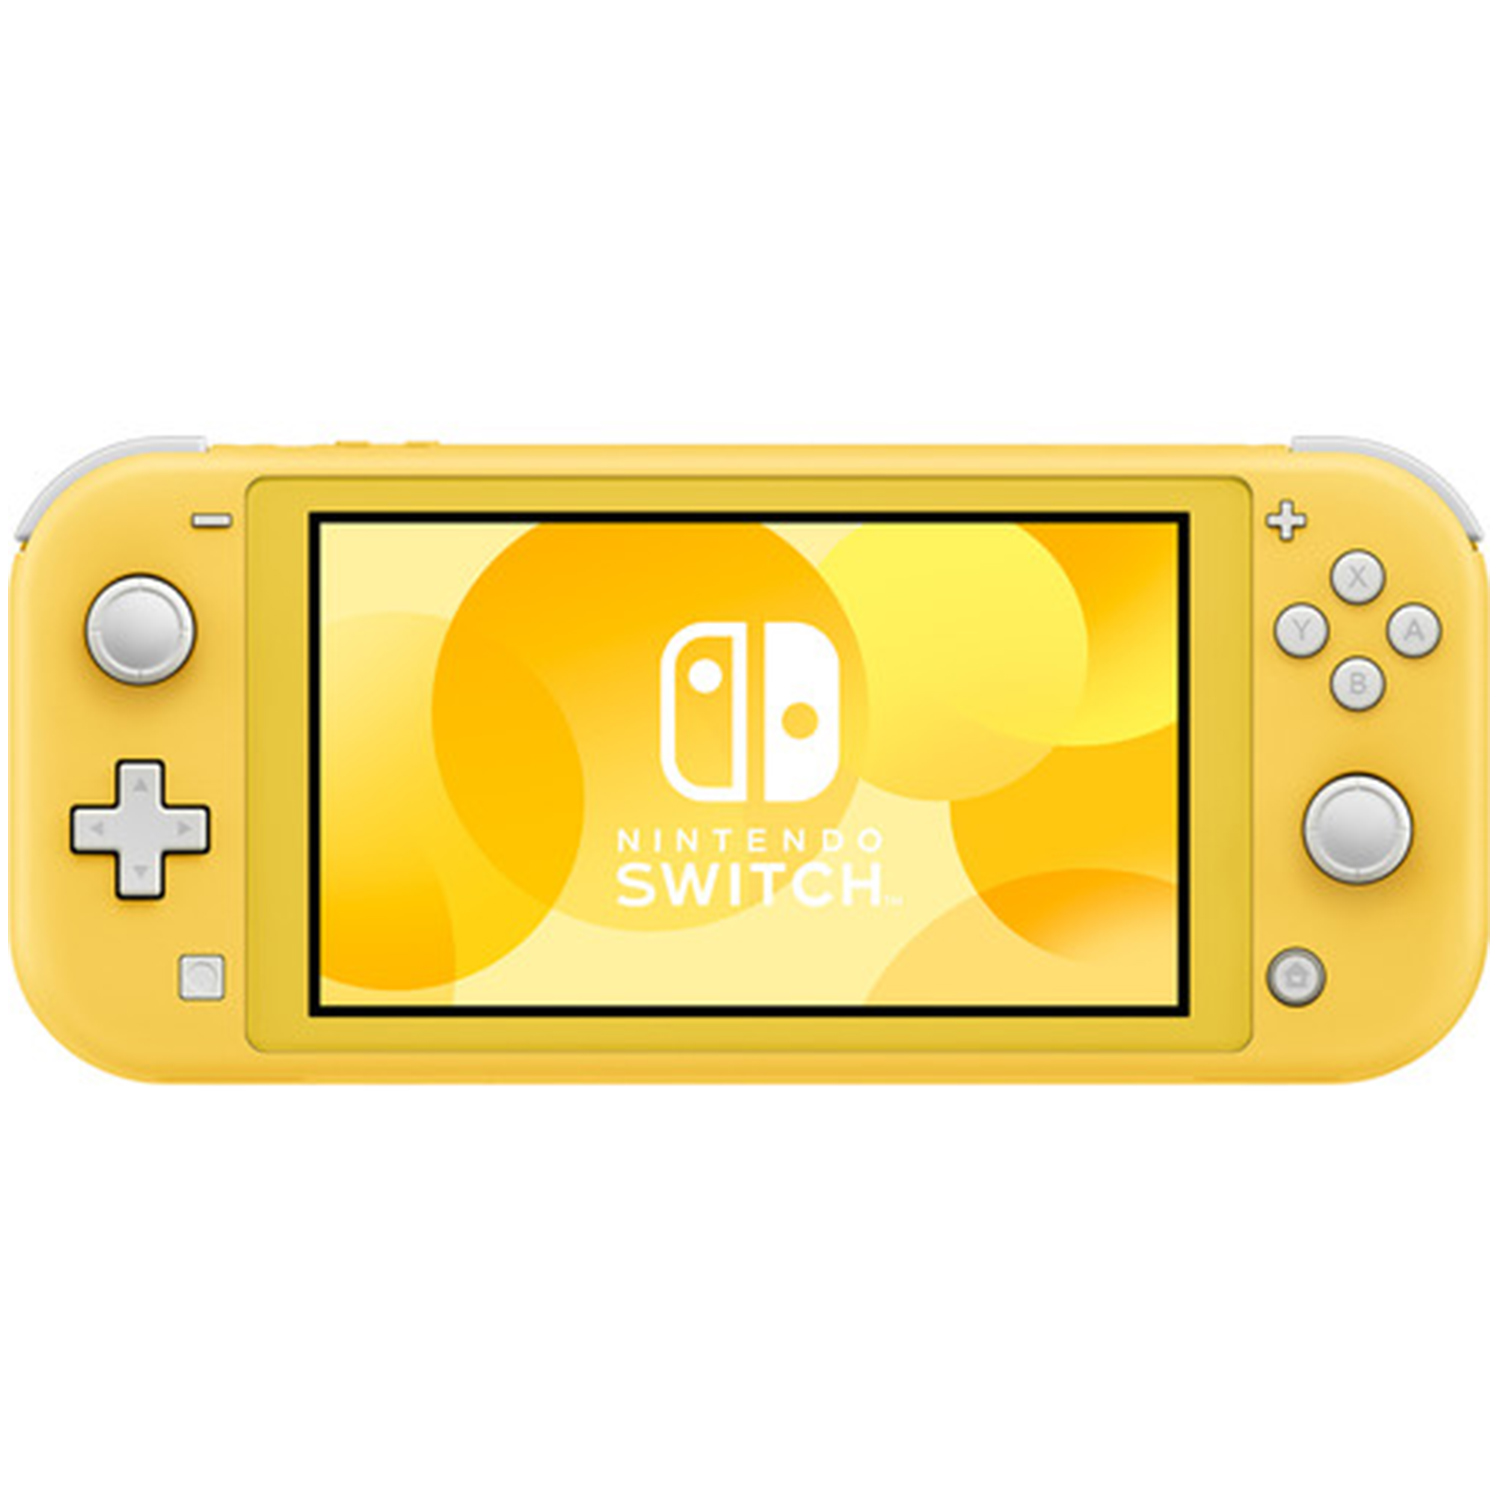 Nintendo Switch Lite Yellow Bundle With Pokemon Shield - $304.79